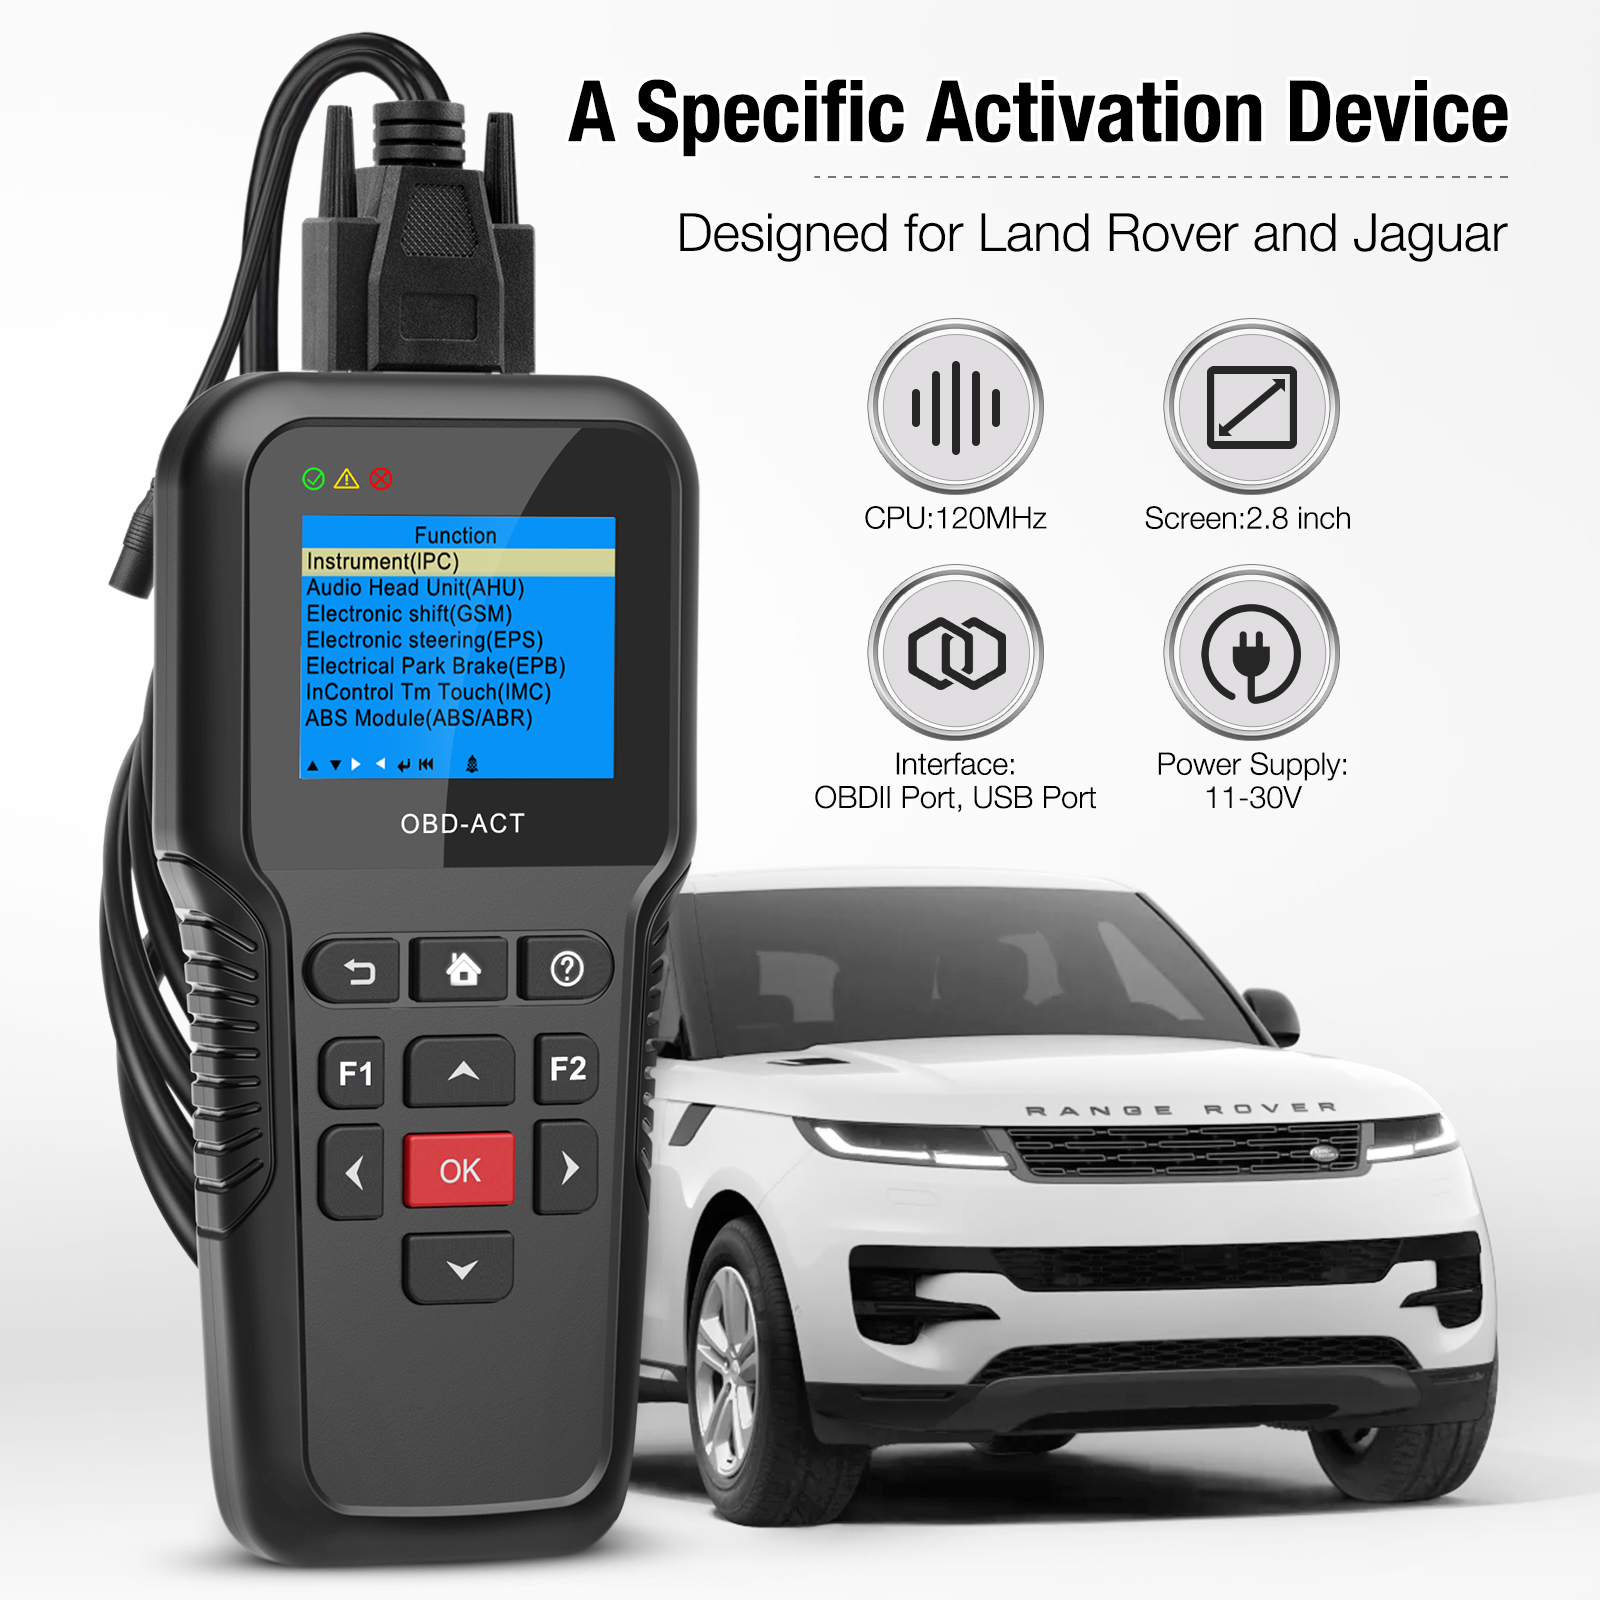 Car JLR Activator IPC Audio Head Unit Activator GSM EPS EPB InControl Tm  Touch ABS Module Activation